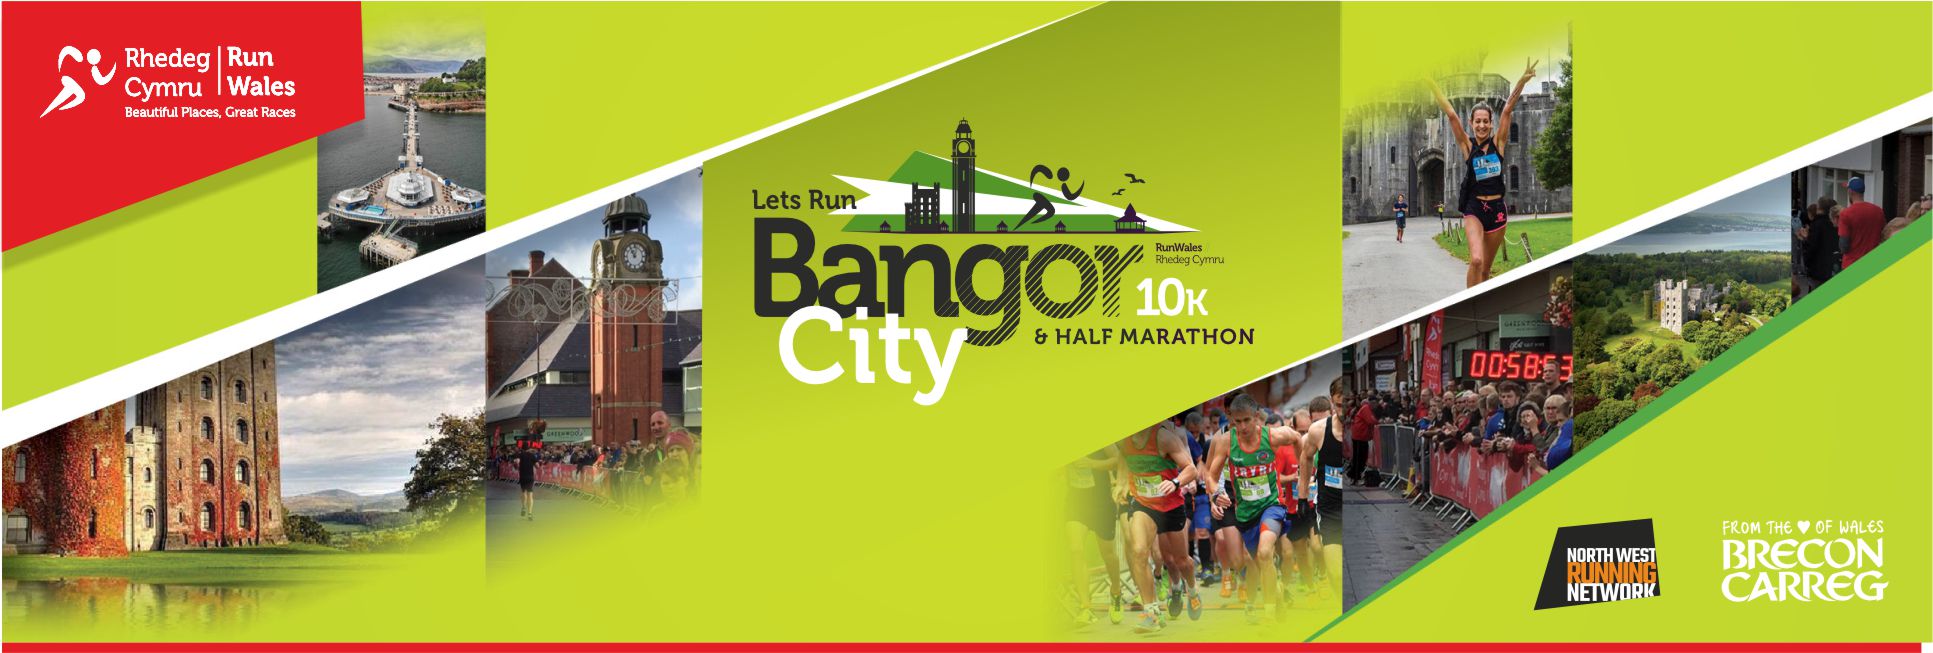 Bangor City 10K & Half Marathon